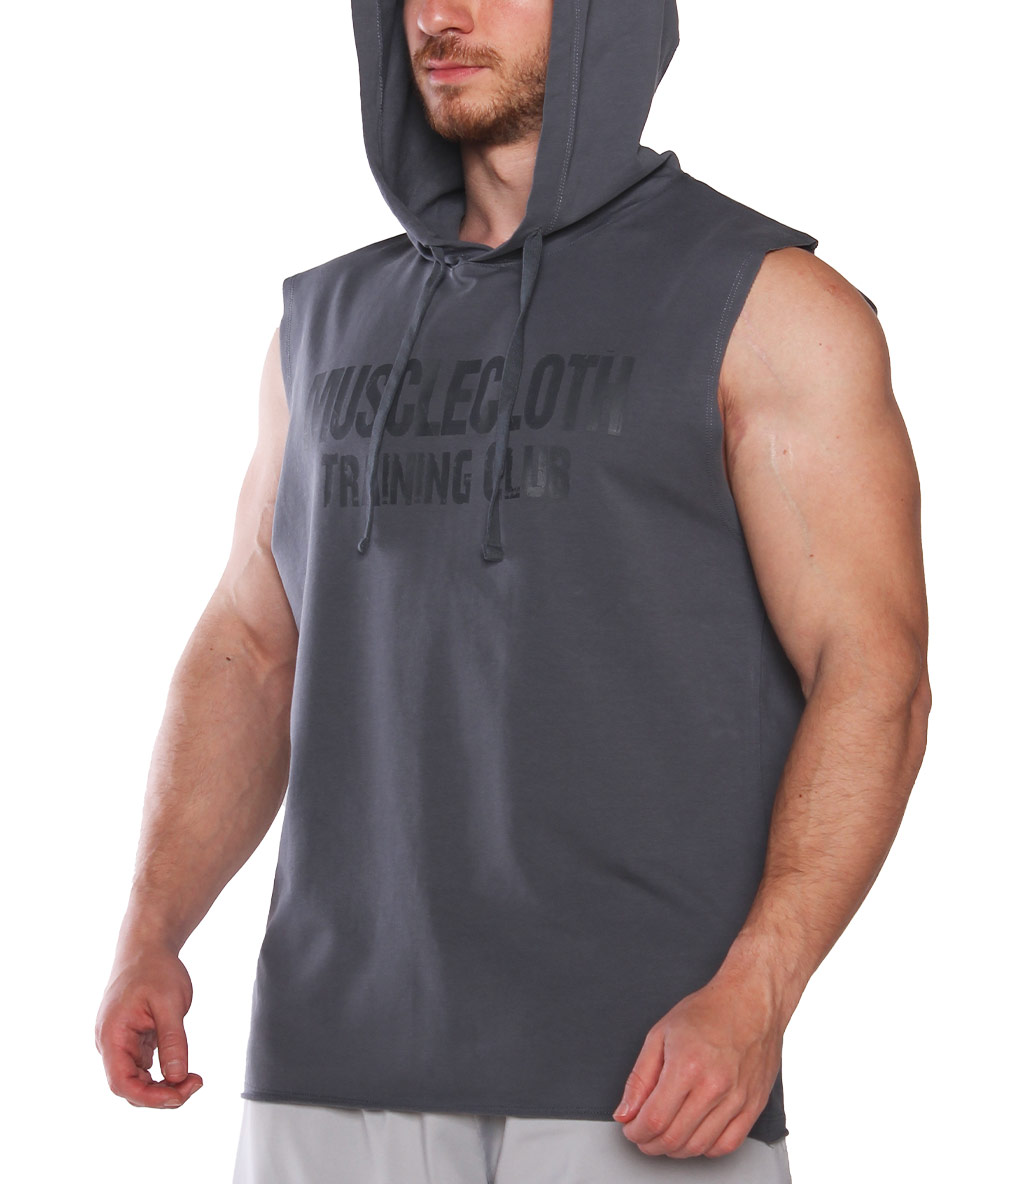 MuscleCloth Training Club Kapüşonlu Kolsuz Sweatshirt Füme